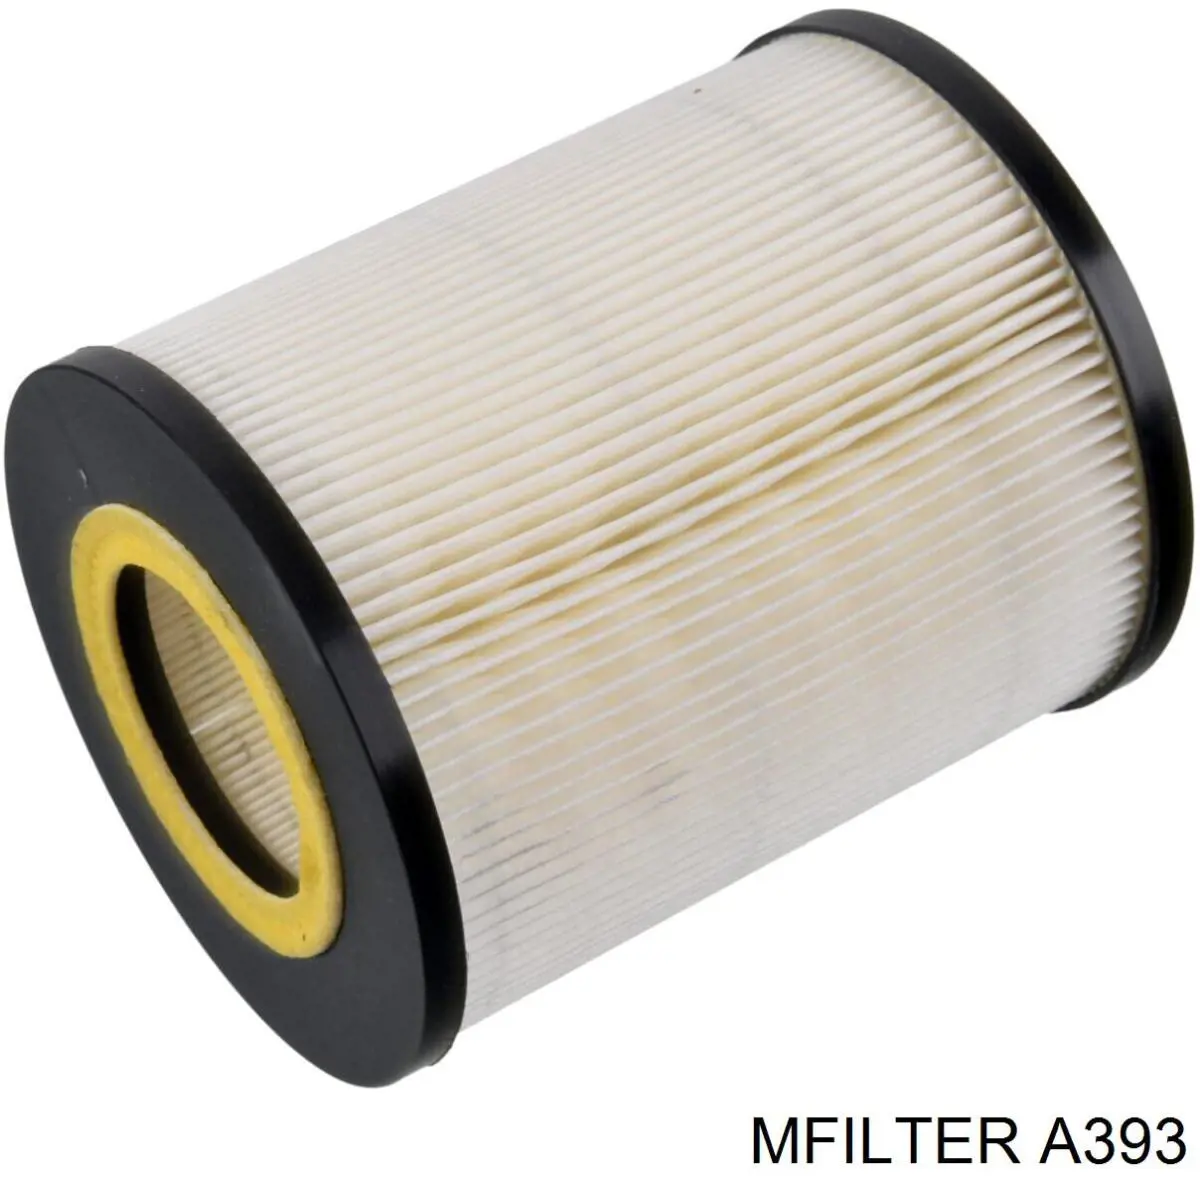 A 393 Mfilter filtro de aire